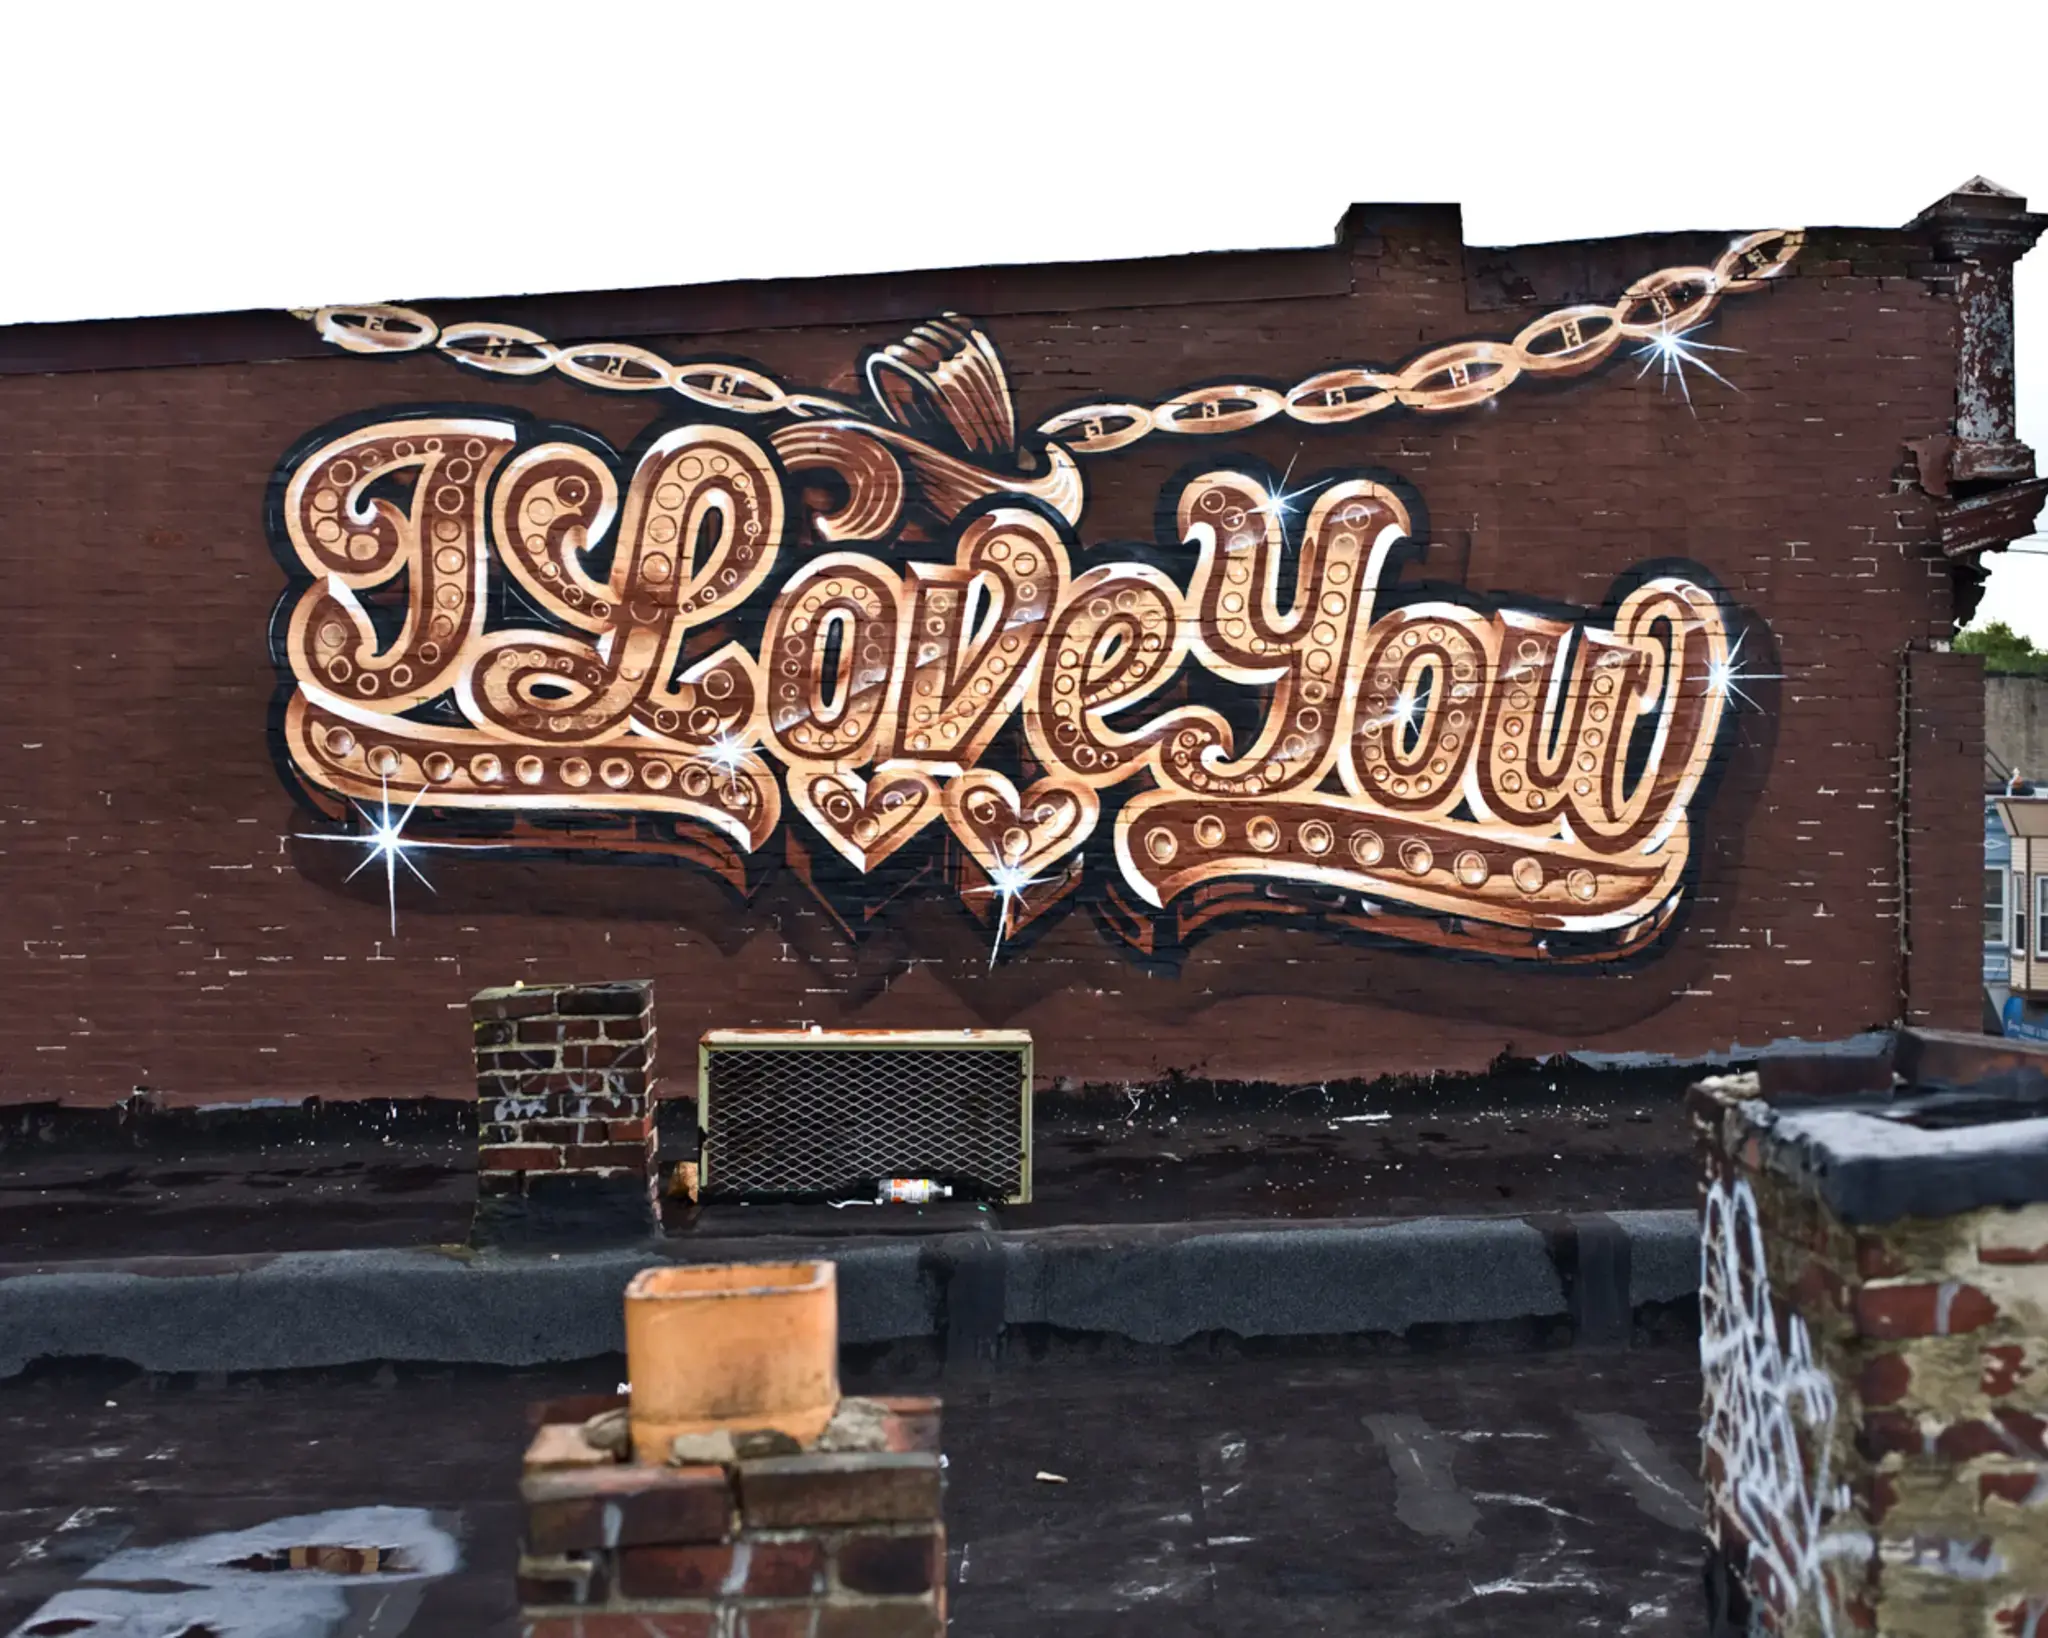 Love Letter by Steve Powers, produced by Philadelphia Mural Arts Program. Photo by Zoe Strauss.